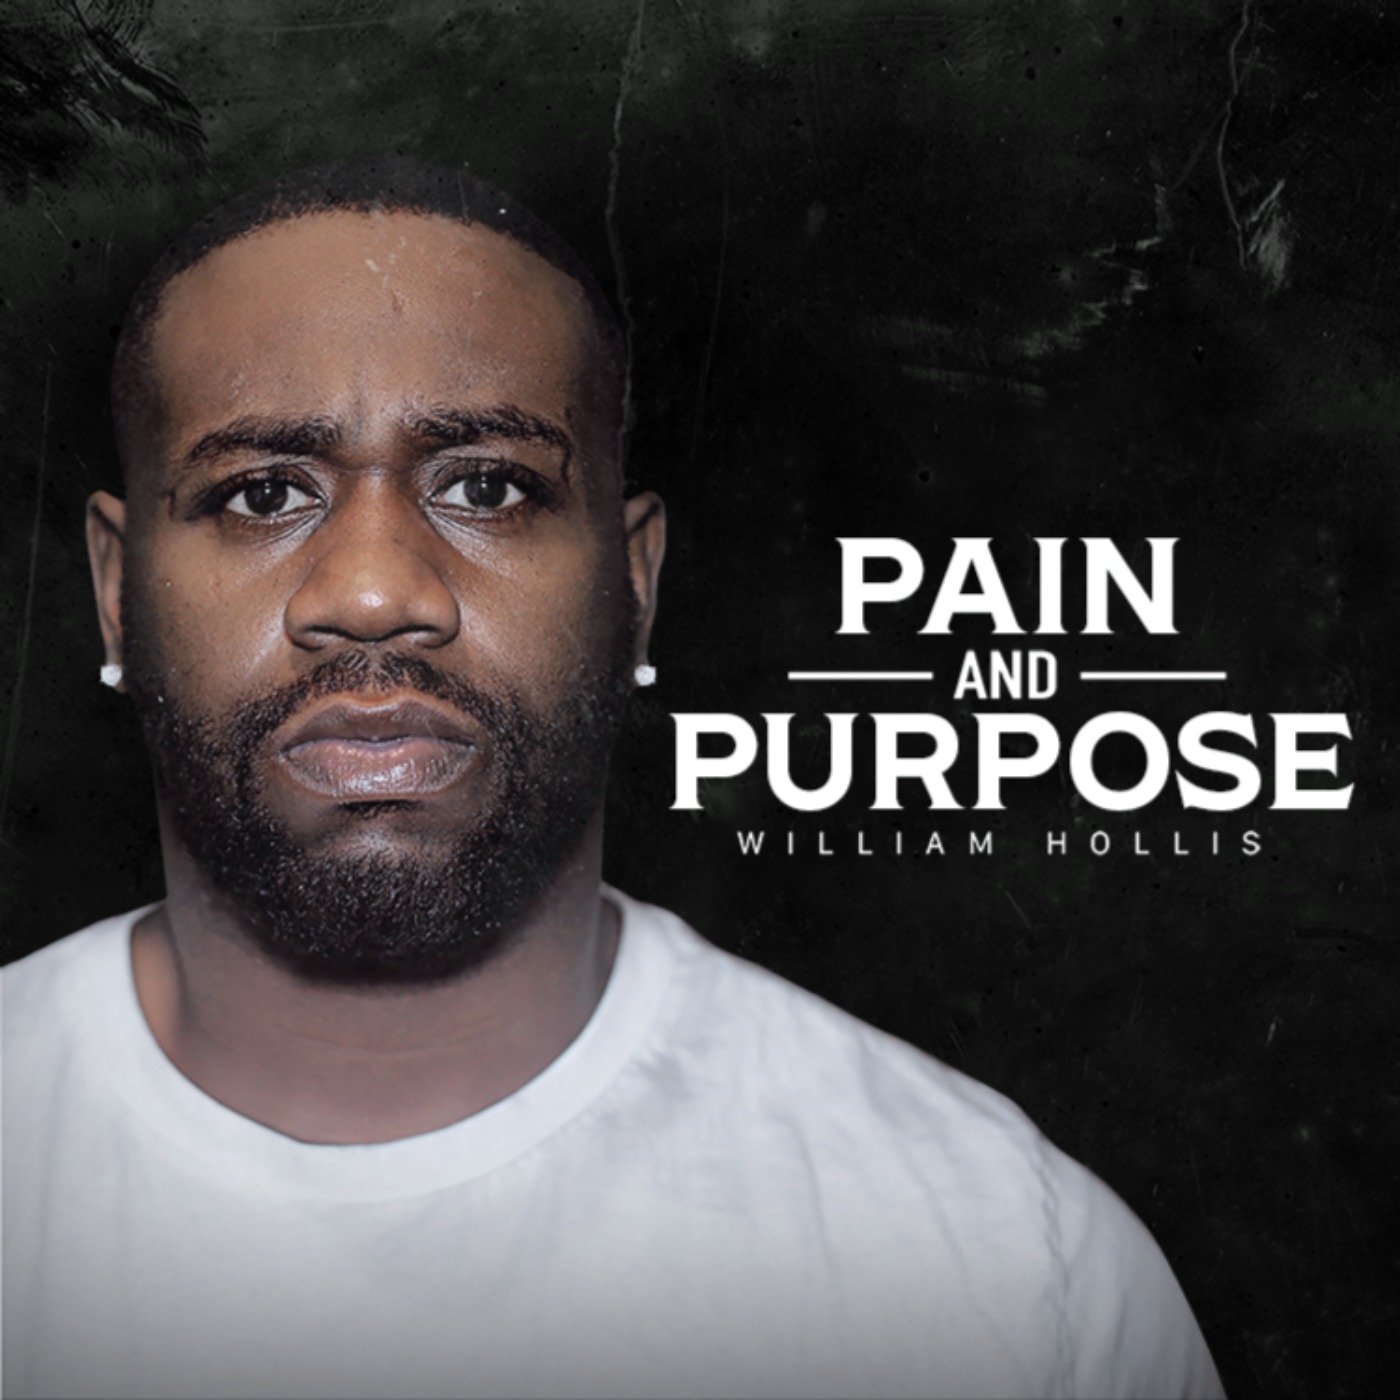 PAIN AND PURPOSE